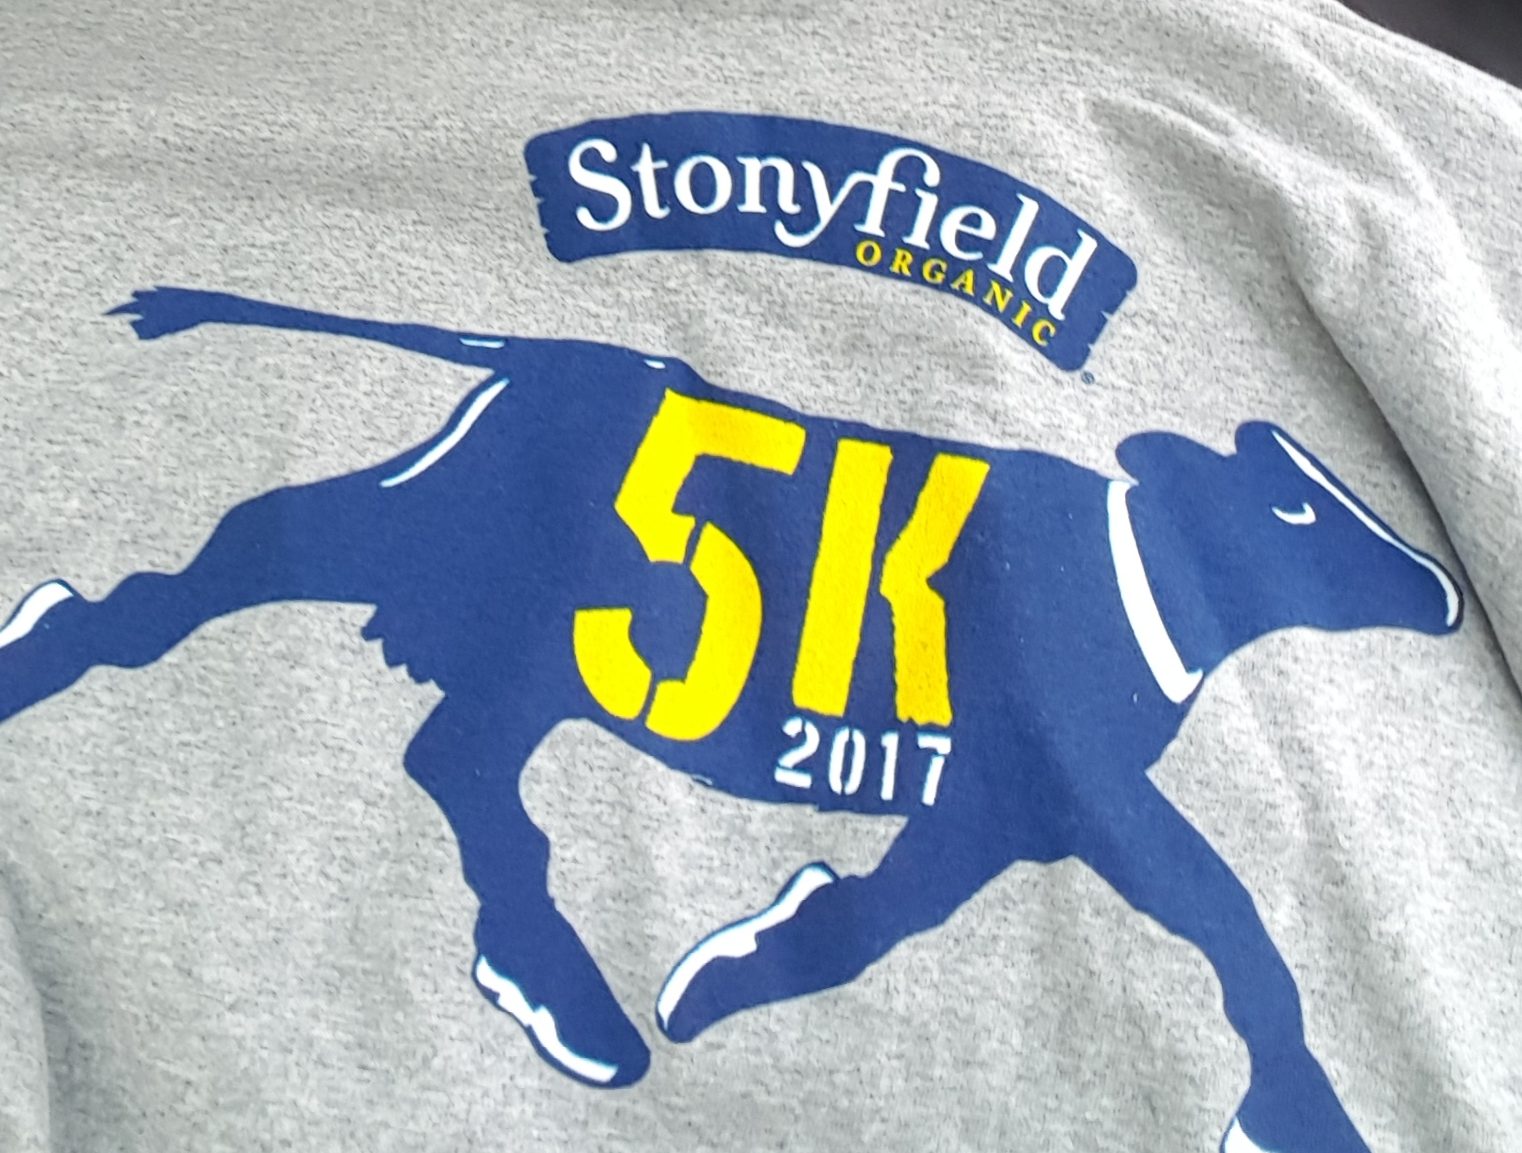 stonyfield 5k race